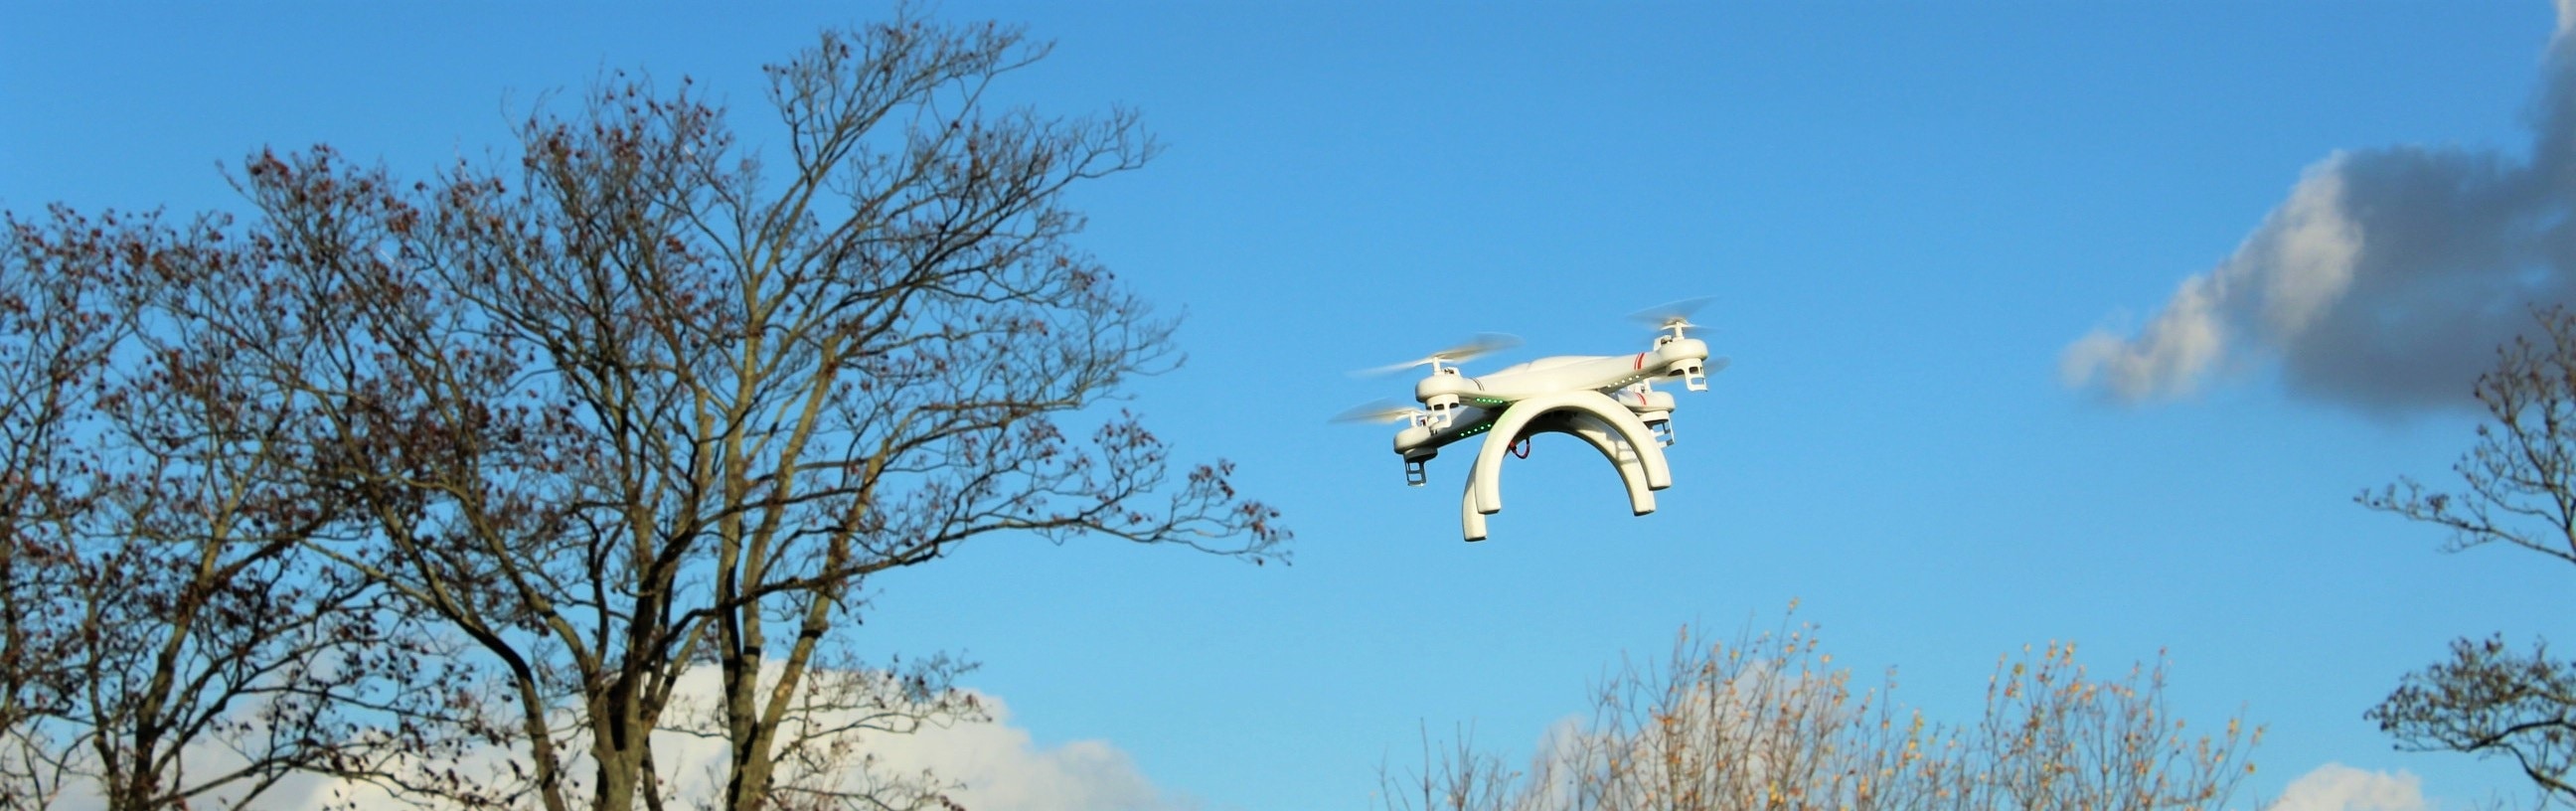 white quadcopter drone